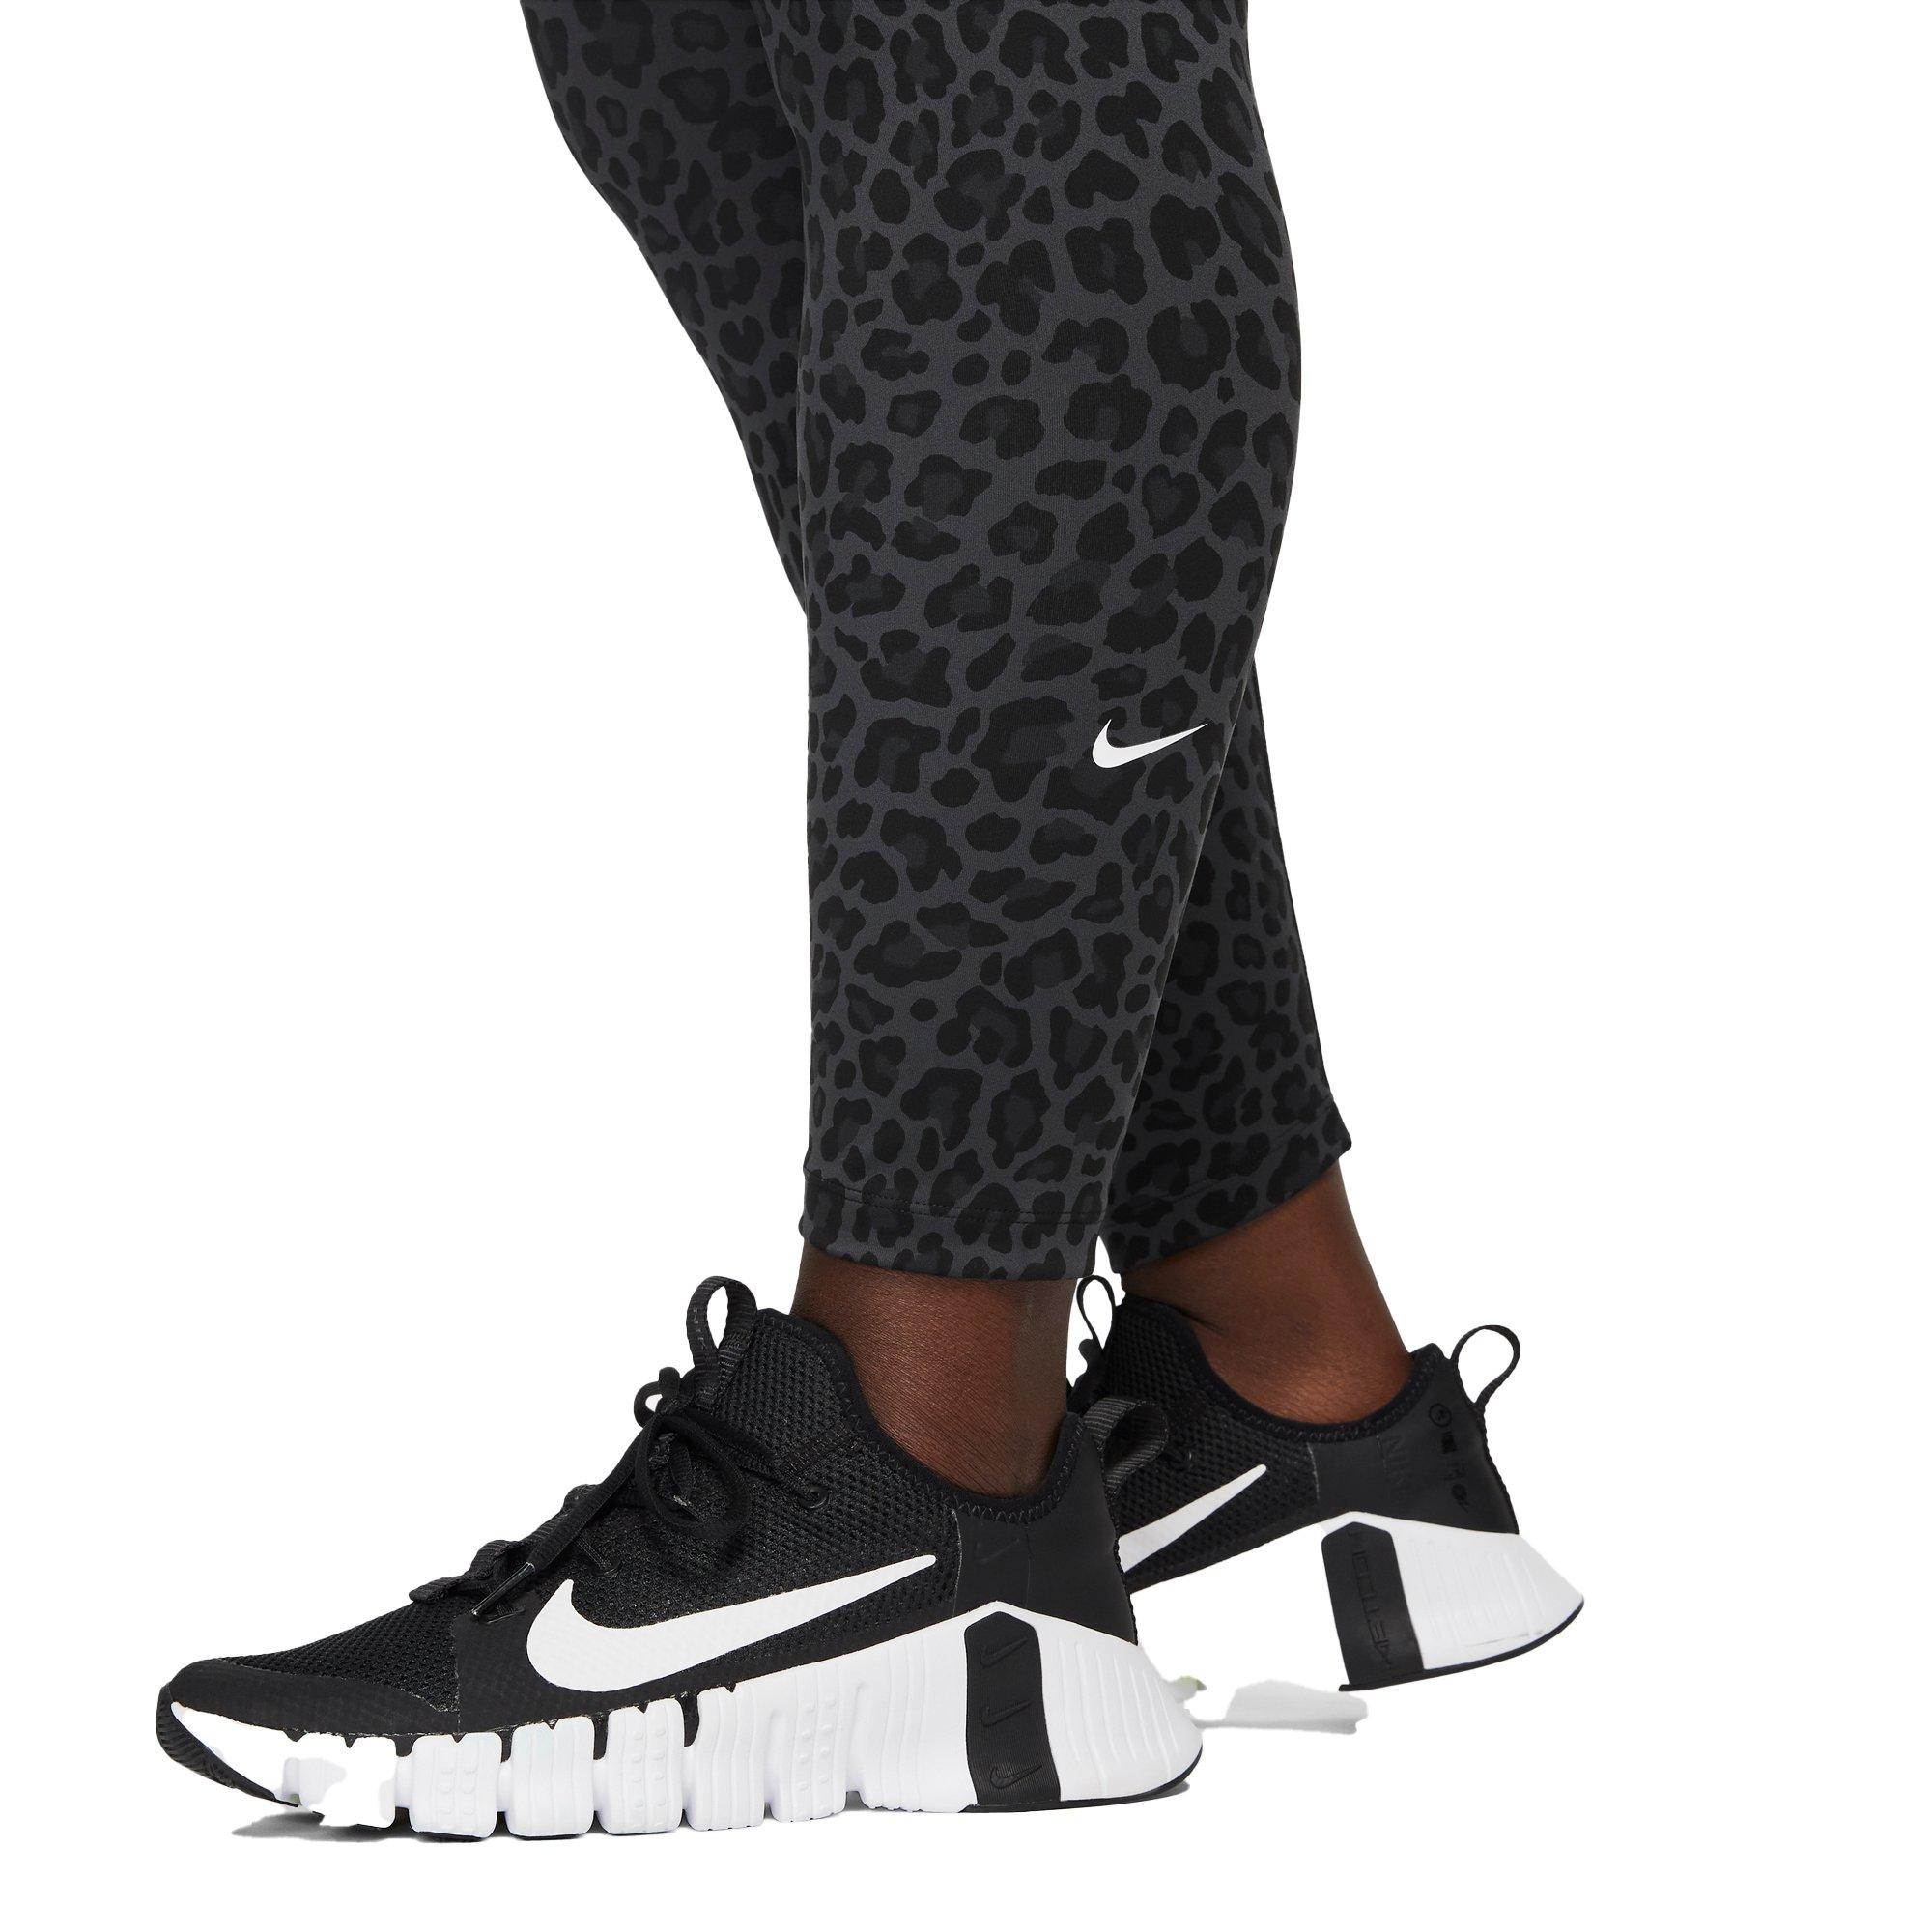 Nike Training One glitter leopard print legging in black